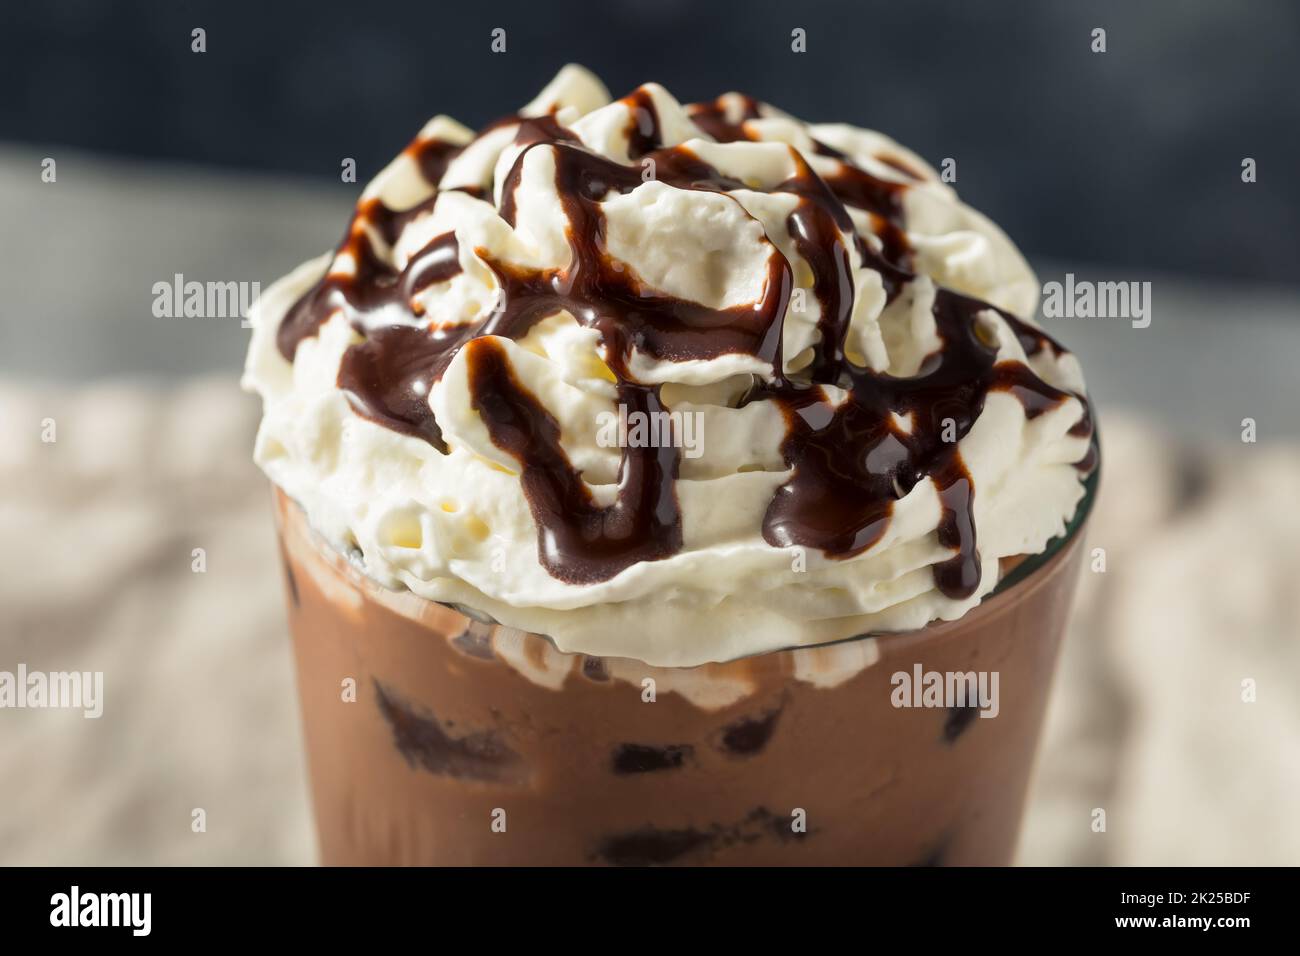 Kalter Iced Mocha Kaffee mit Schlagsahne und Schokolade Stockfoto